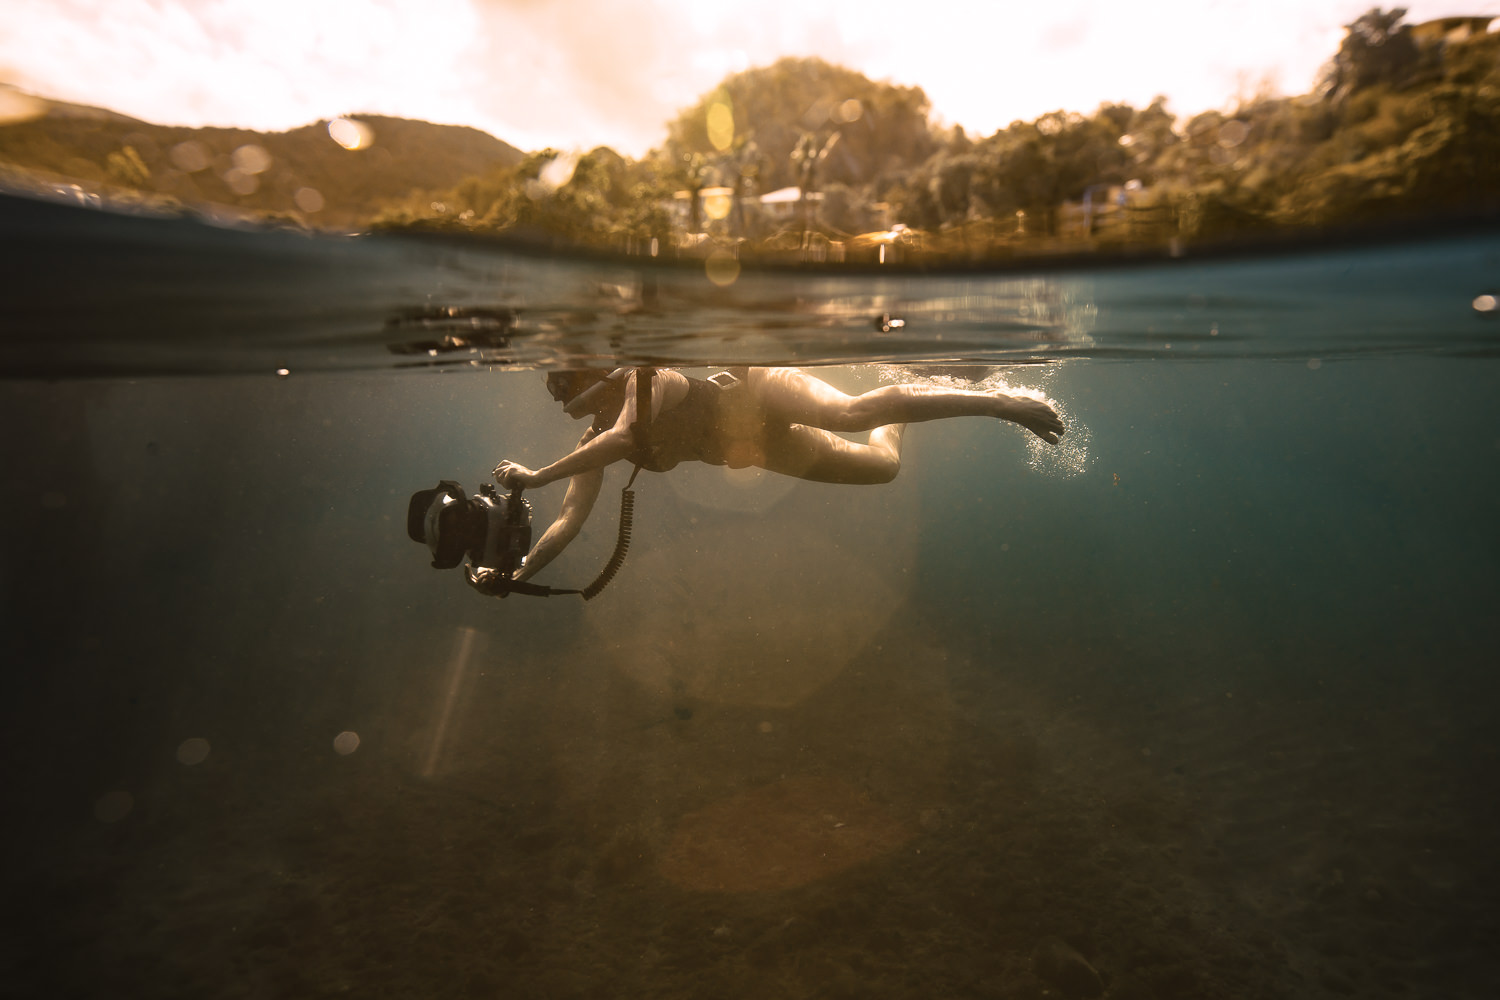 Photographe underwater professionnel